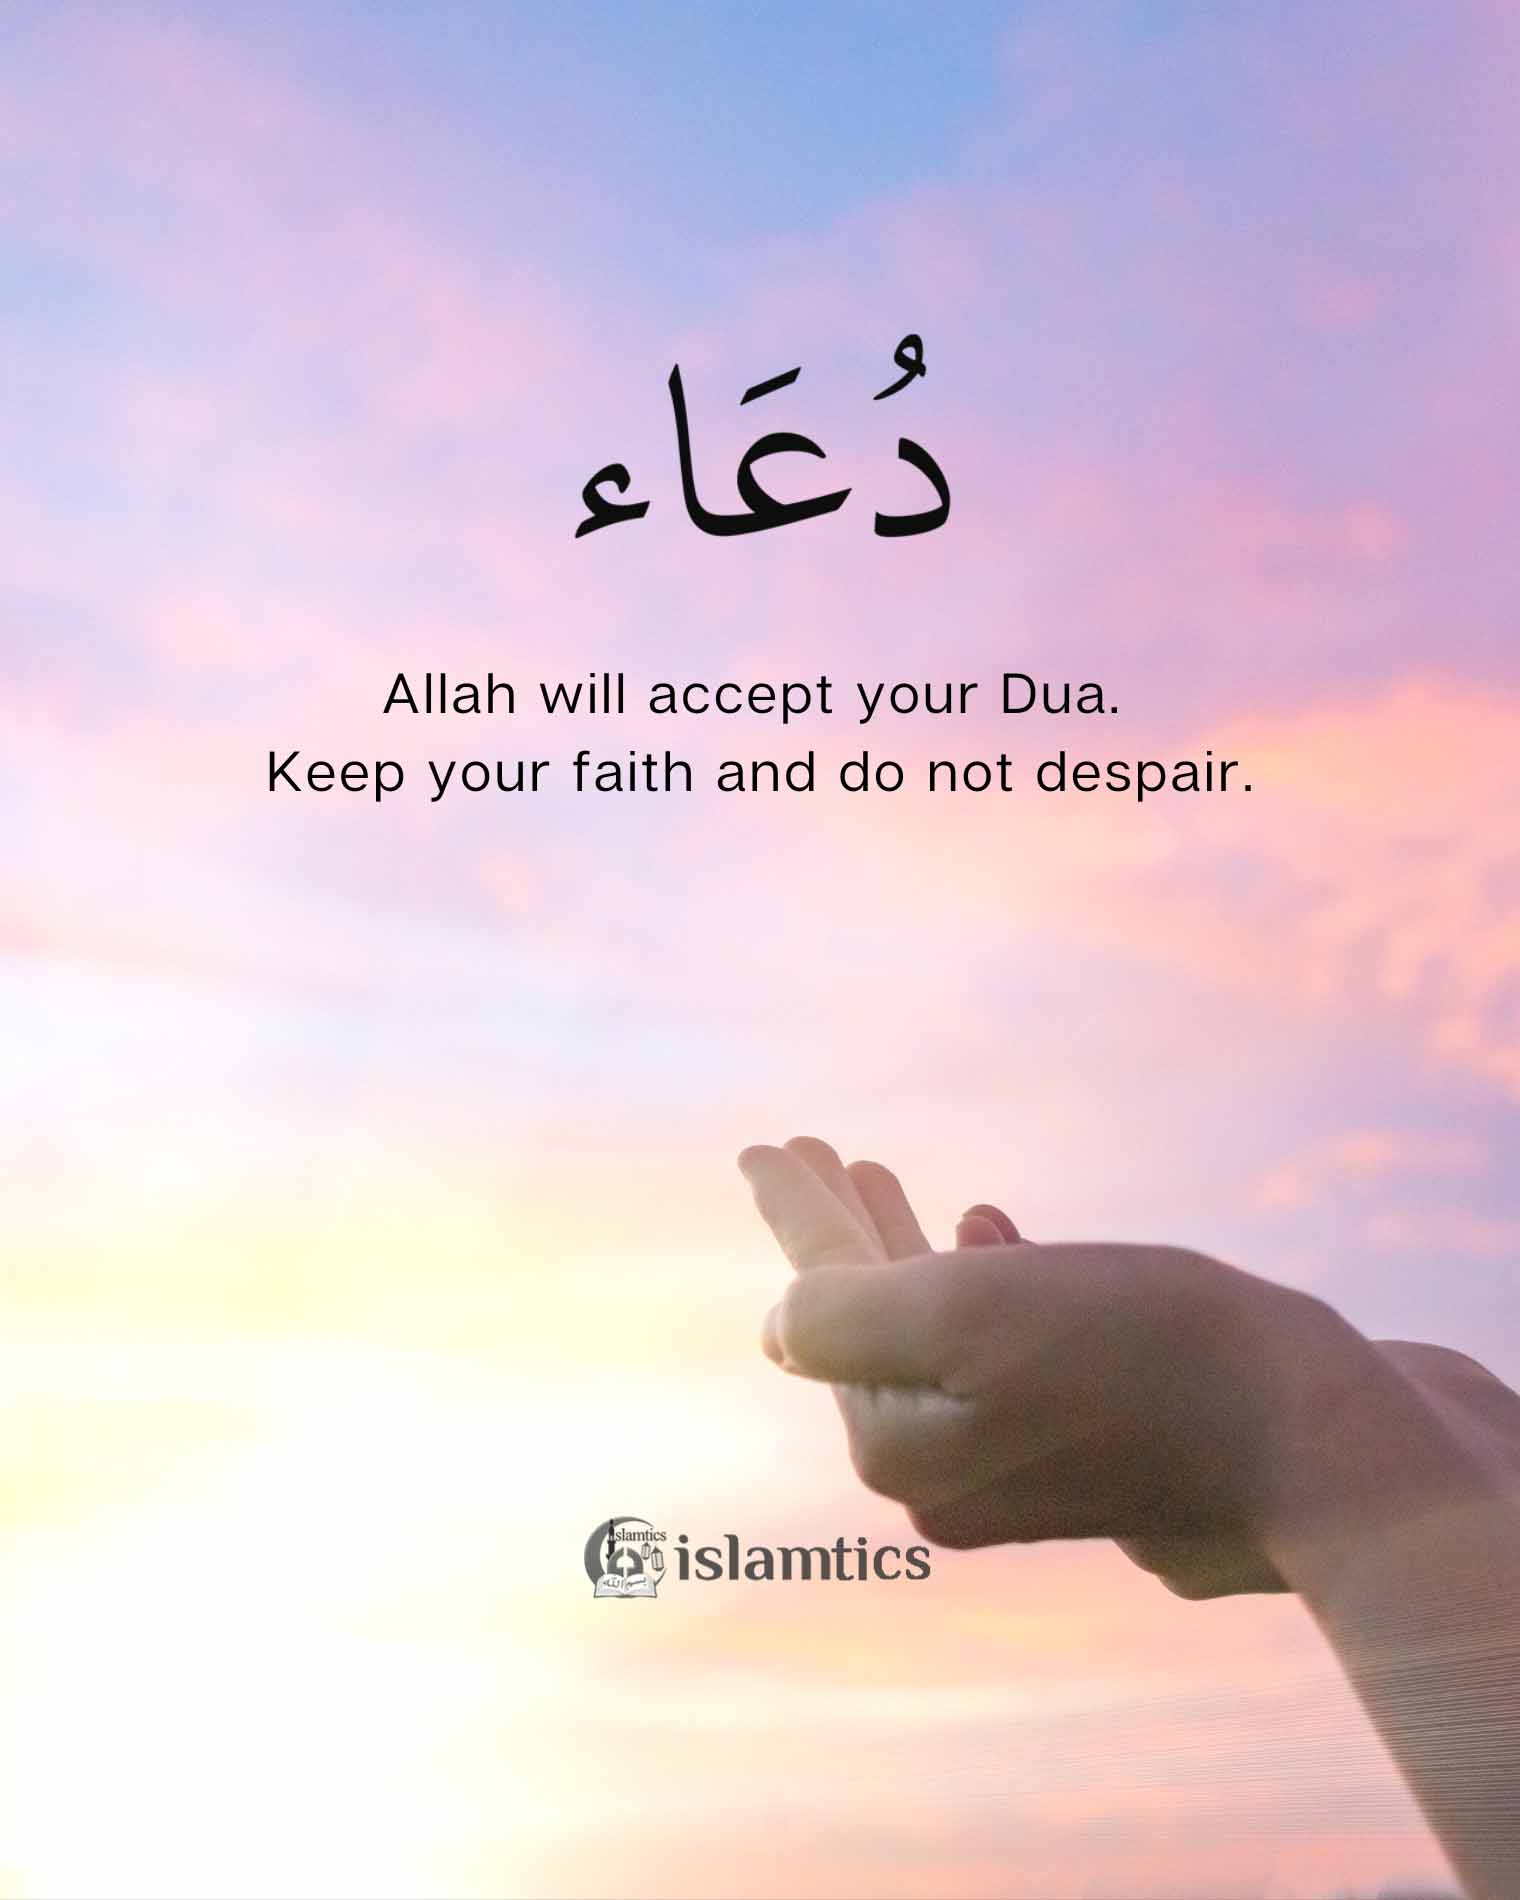  Allah will accept your Dua. Keep your faith and do not despair.